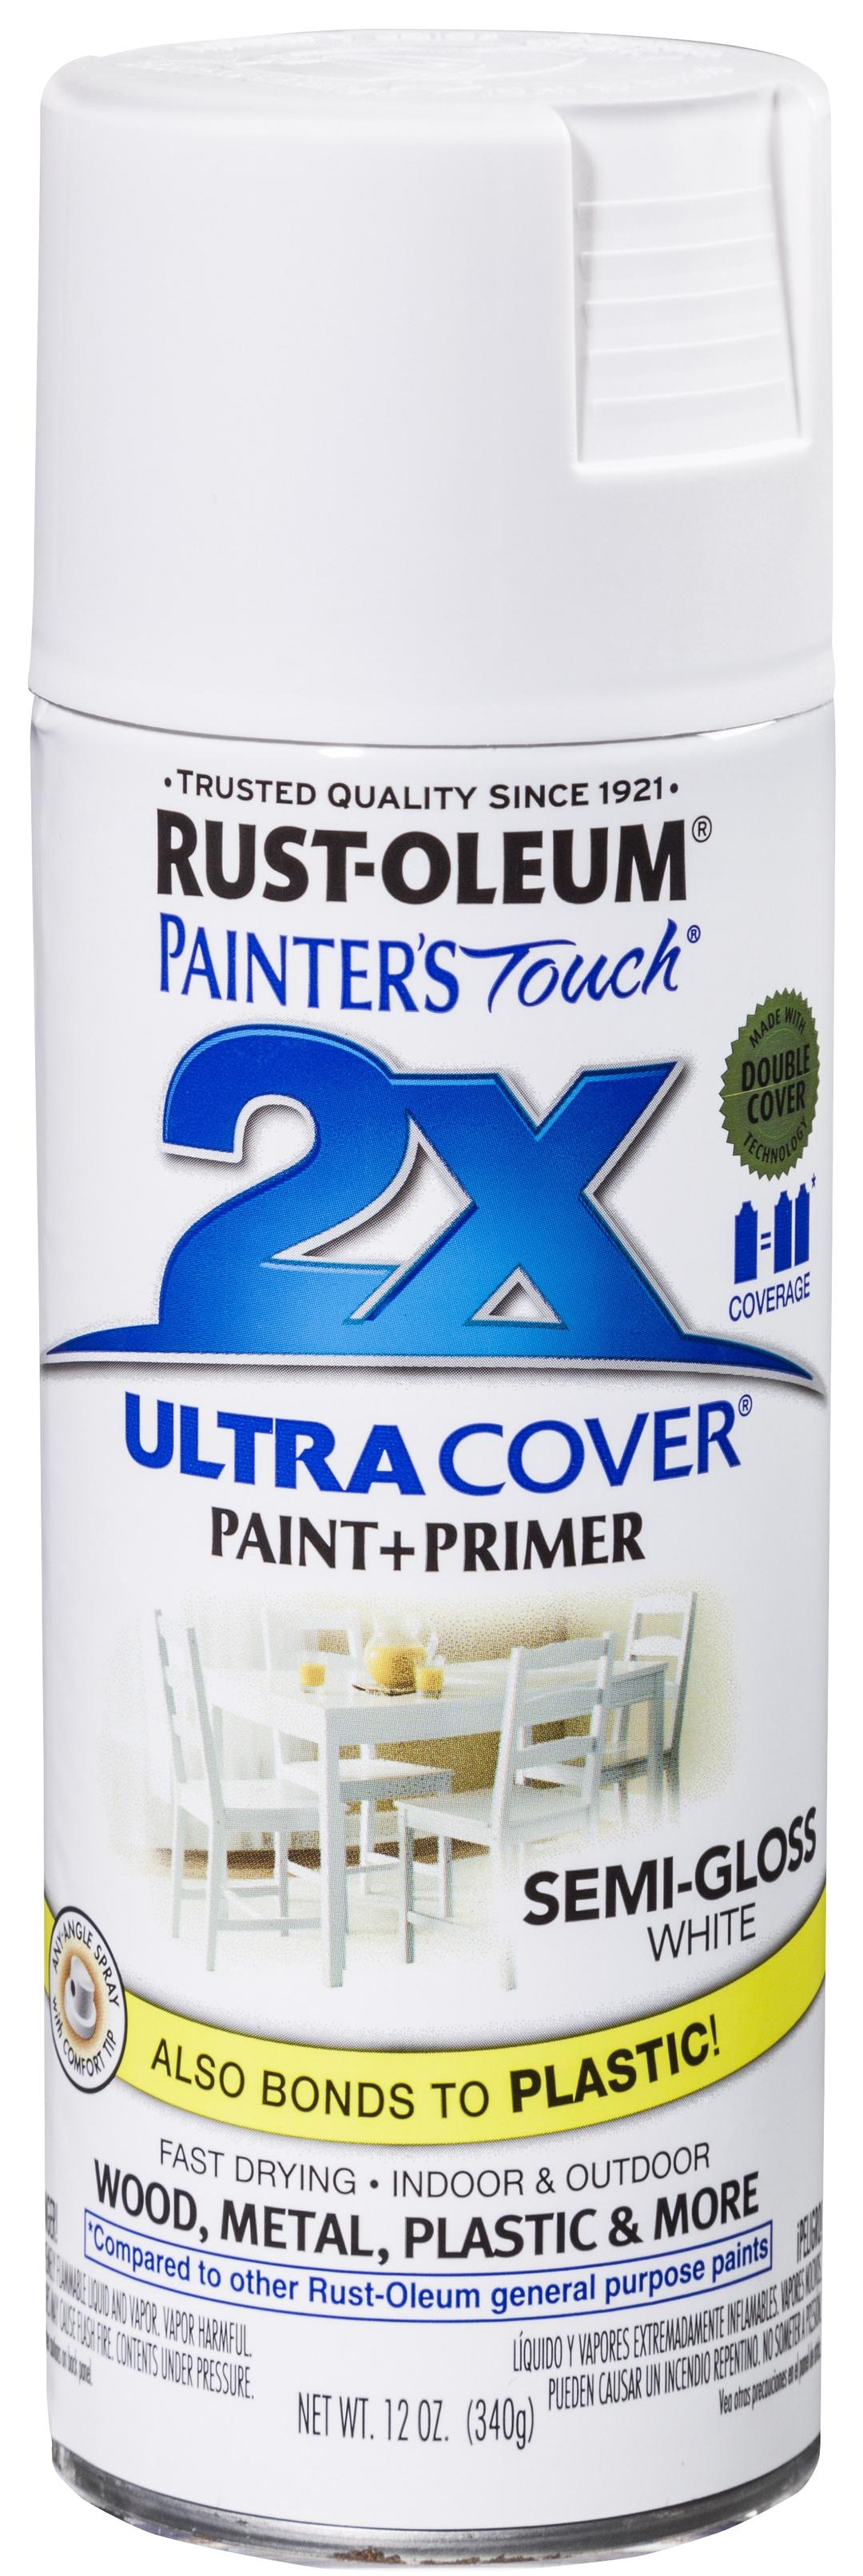 15 oz 2x White Marking Spray Paint 6-Pack